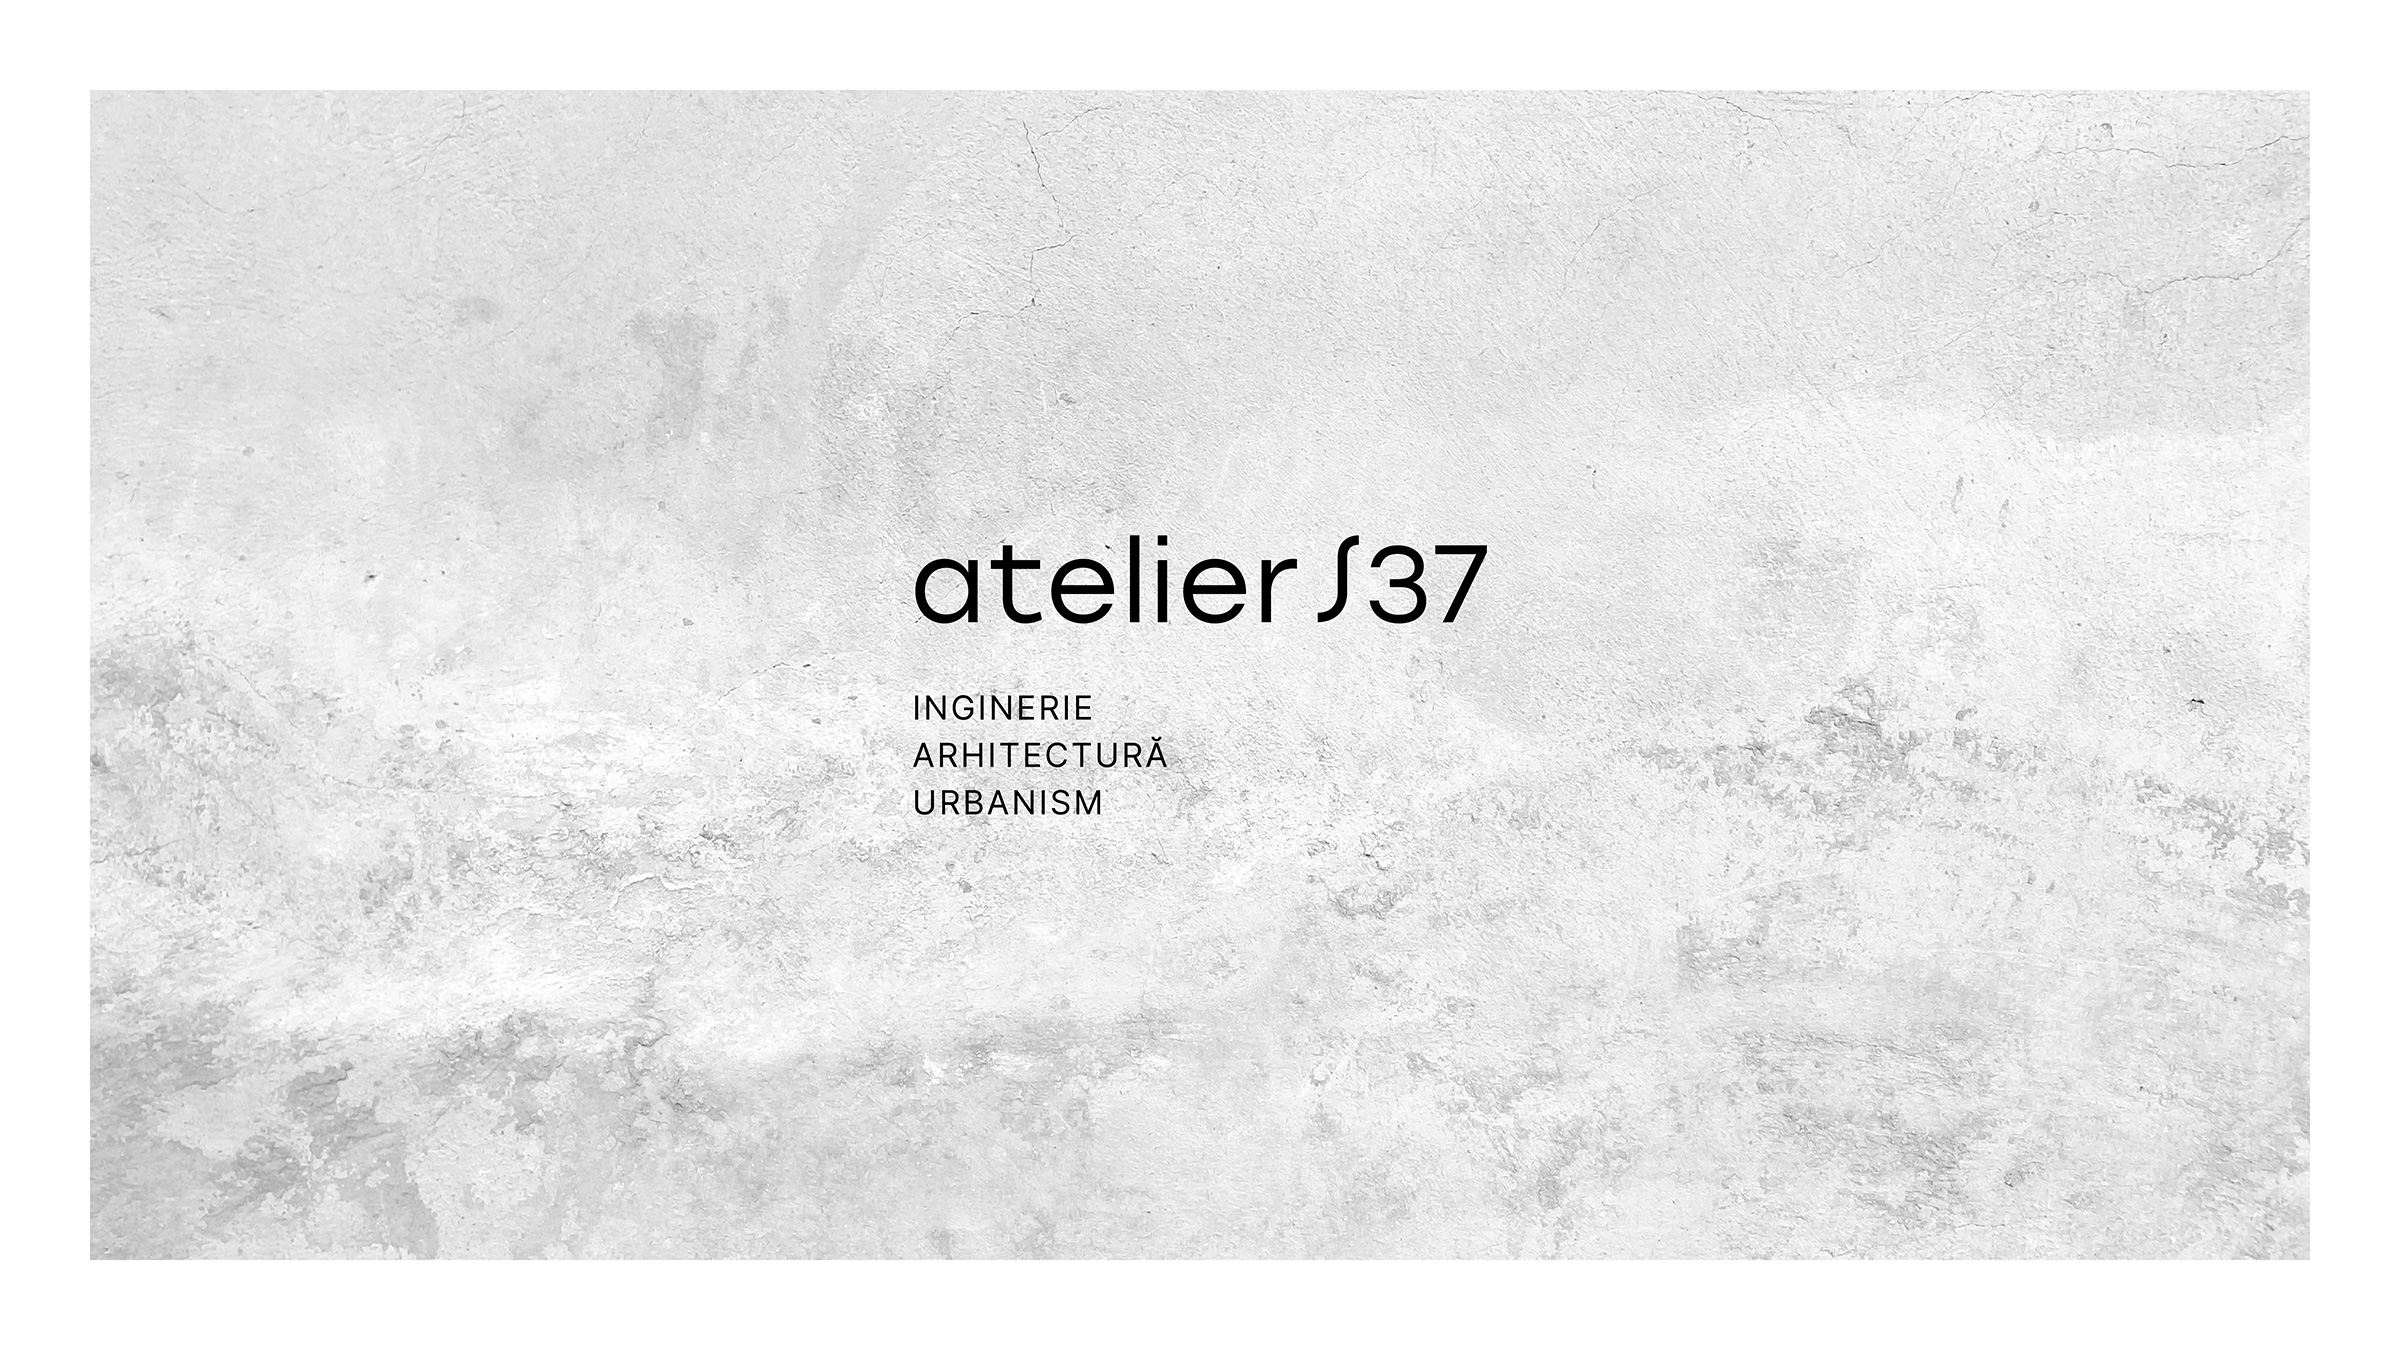 Creion Design Studio Branding for Atelier S37 Construction Design Office from Romania